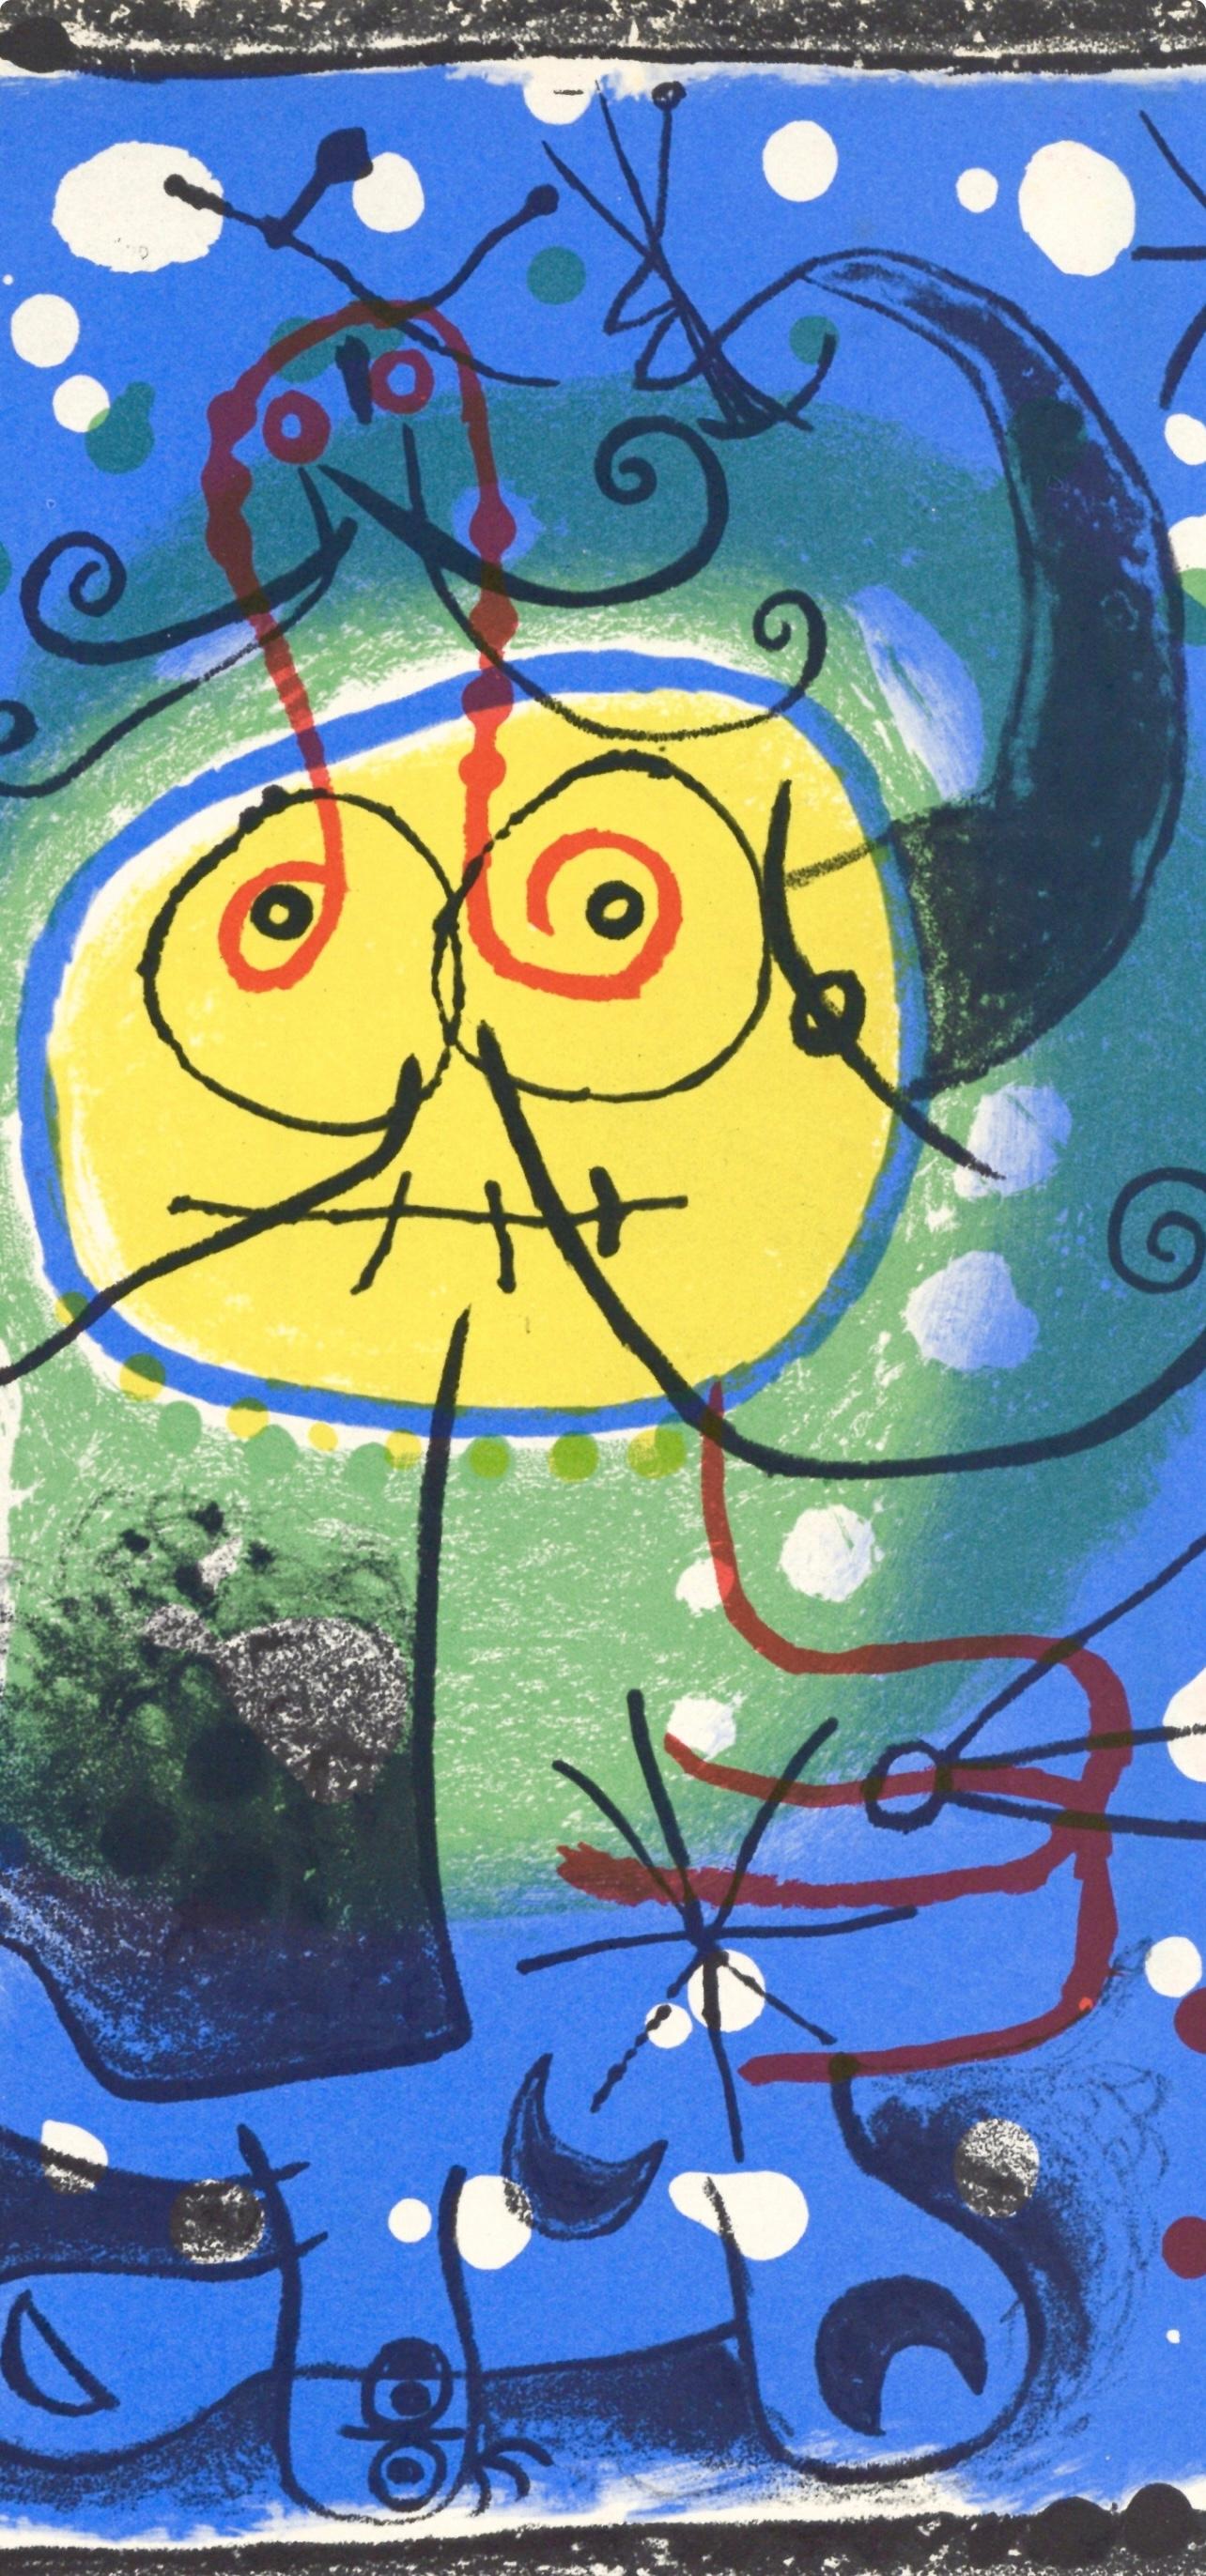 Miró, Personnage sur fond bleu, XXe Siècle (after) - Print by Joan Miró